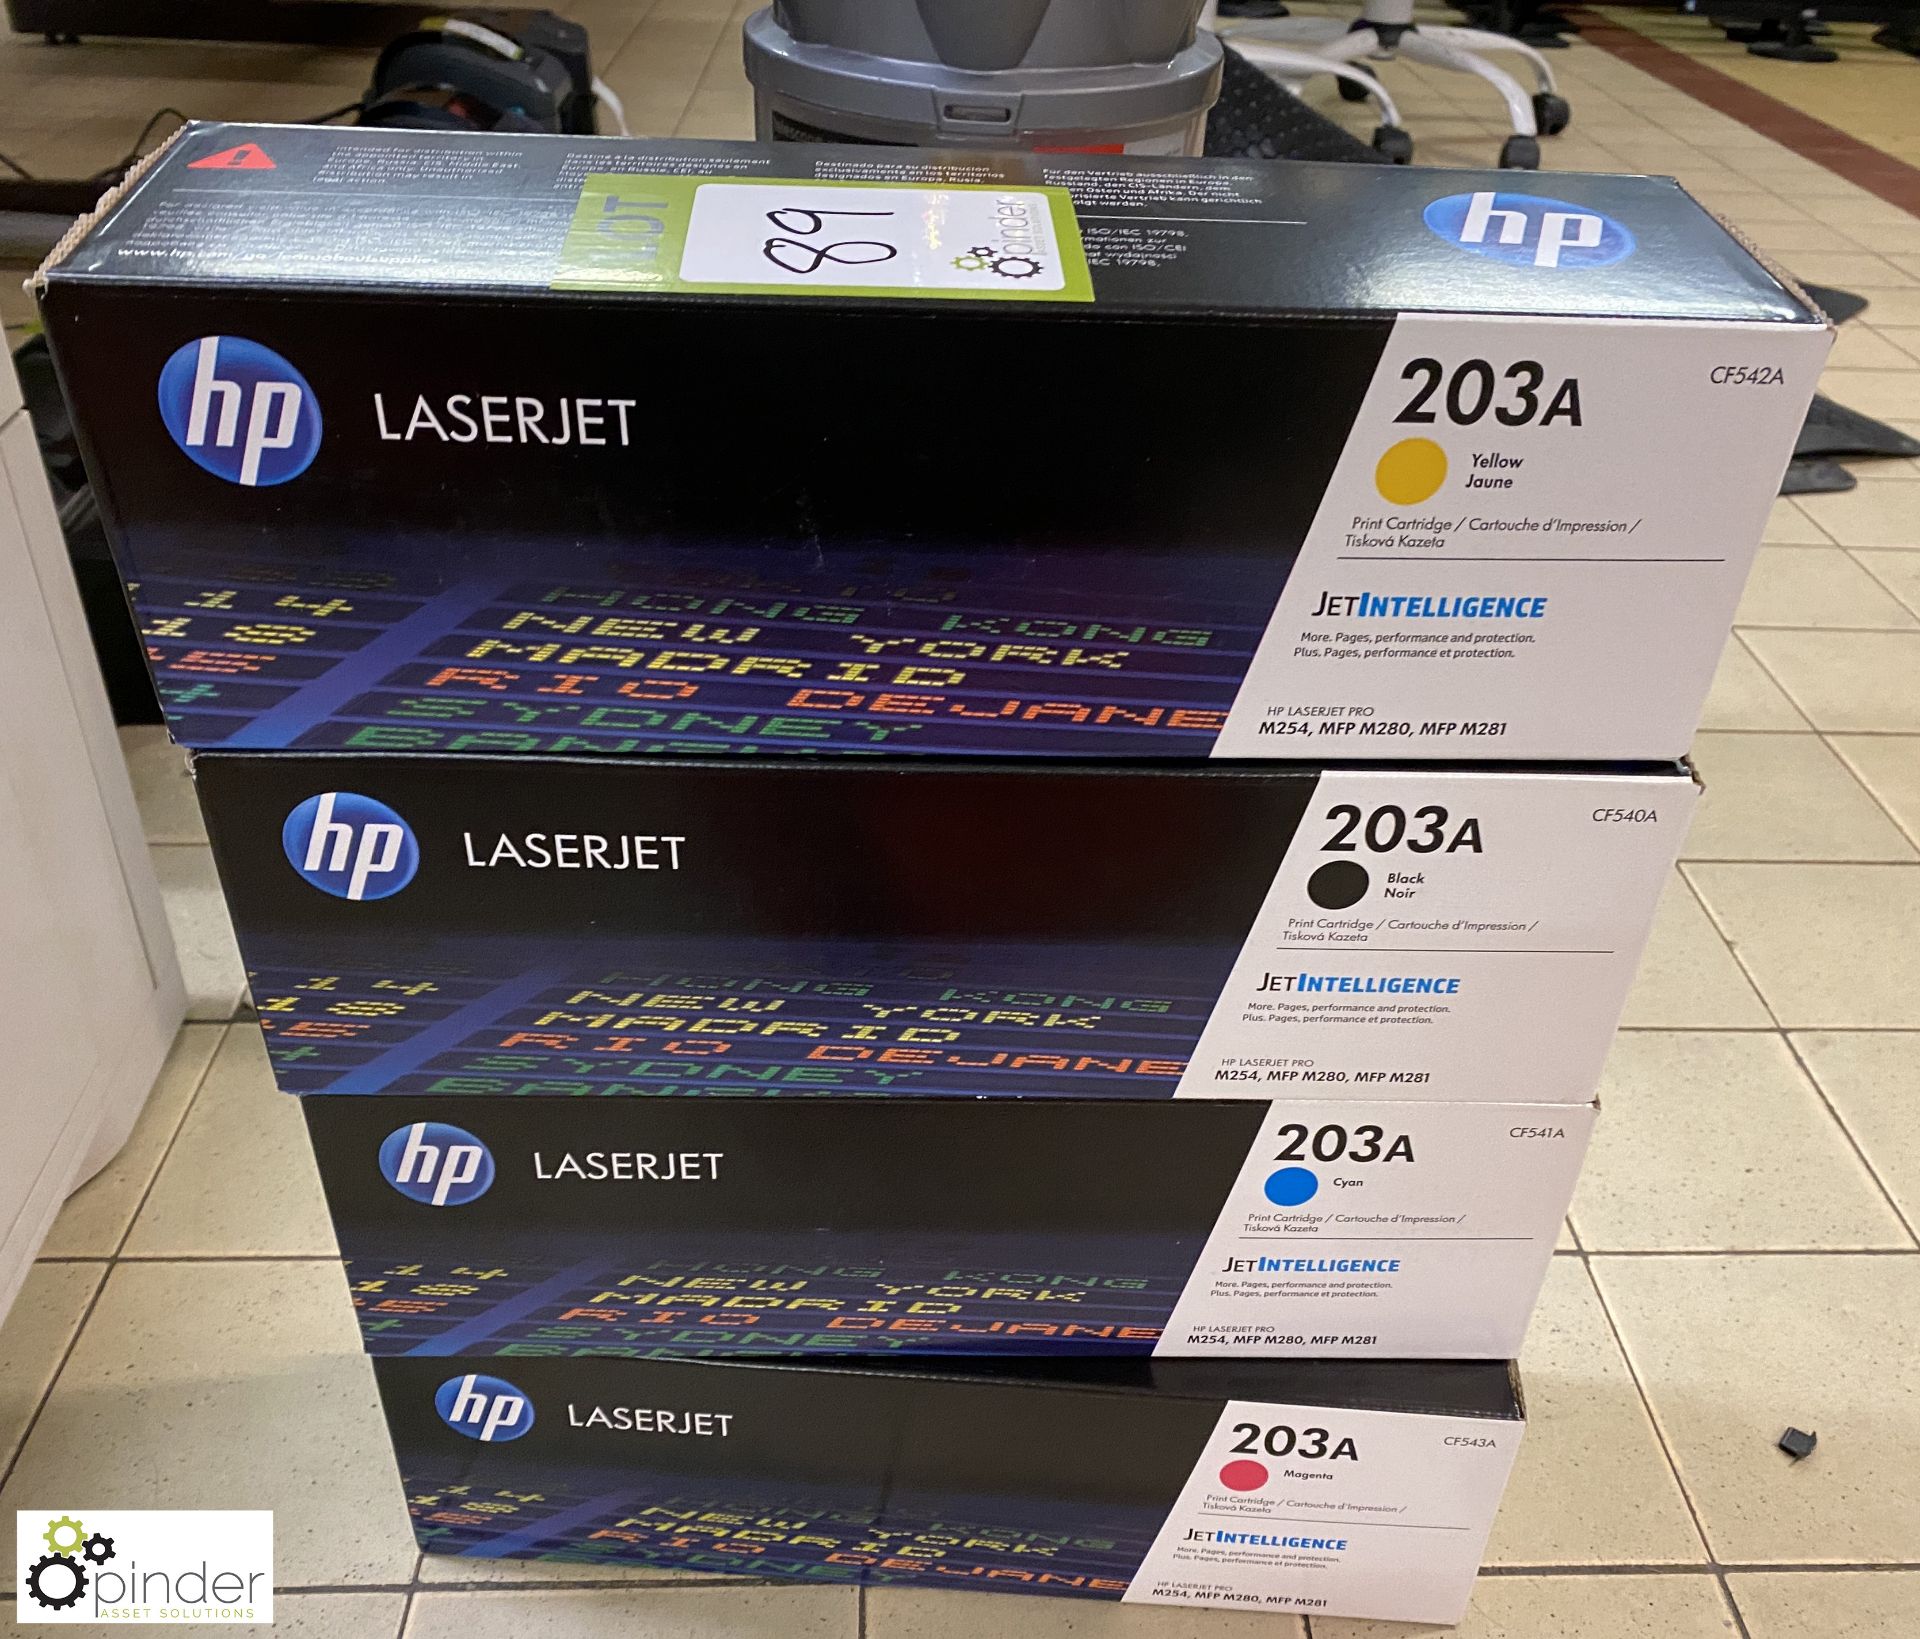 4 HP Laserjet Print Cartridges, 203A, yellow, cyan, magenta and black